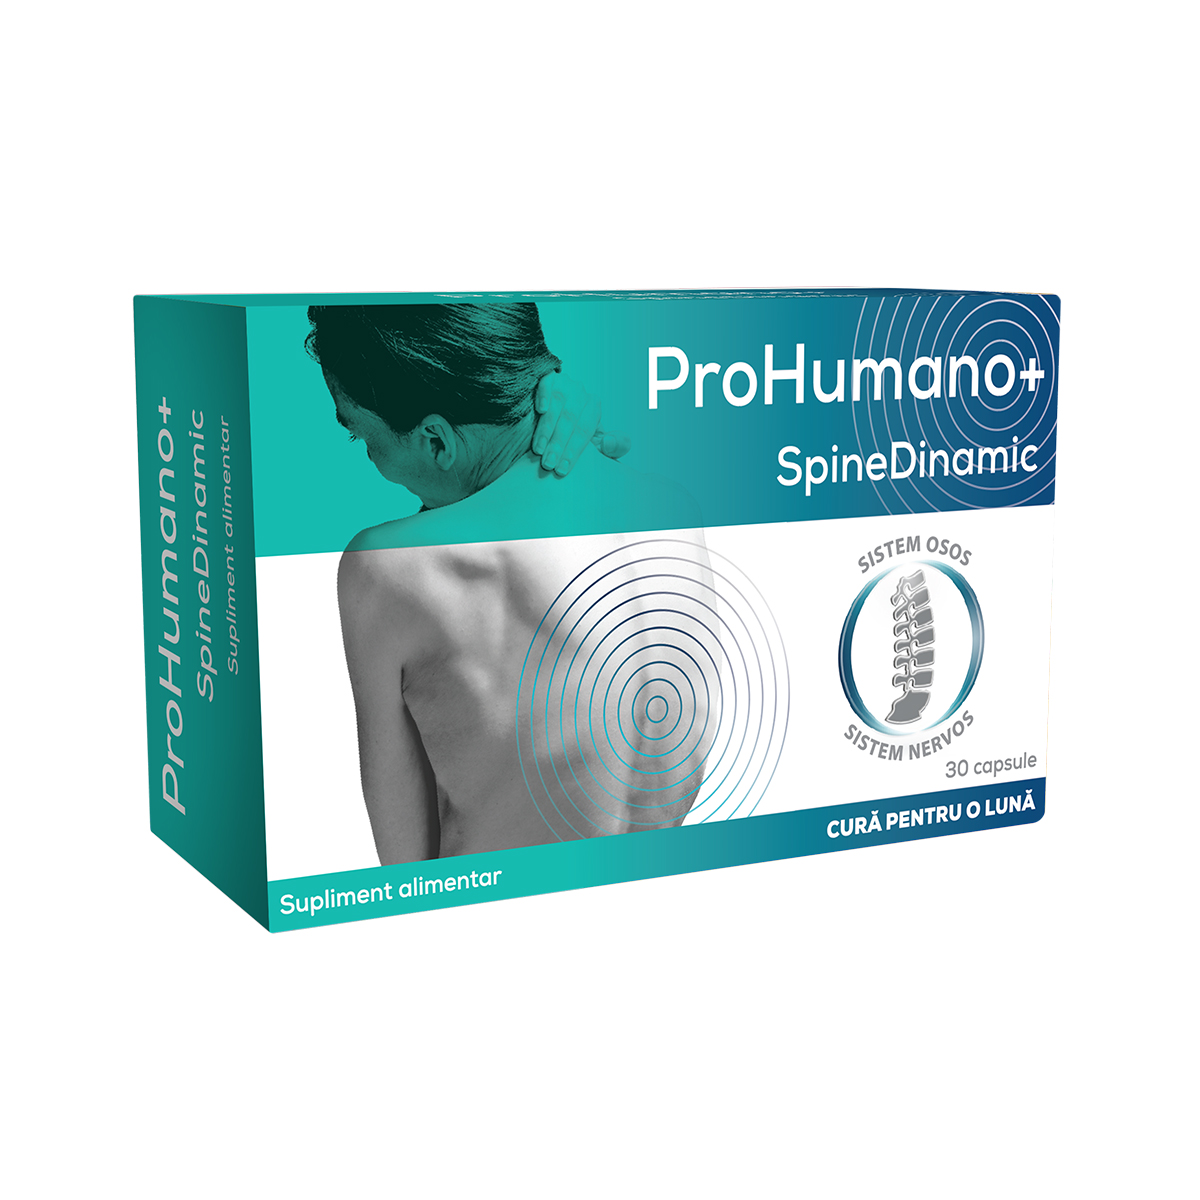 Adulti - ProHumano+ SpineDinamic, 30 capsule, Pharmalinea, sinapis.ro